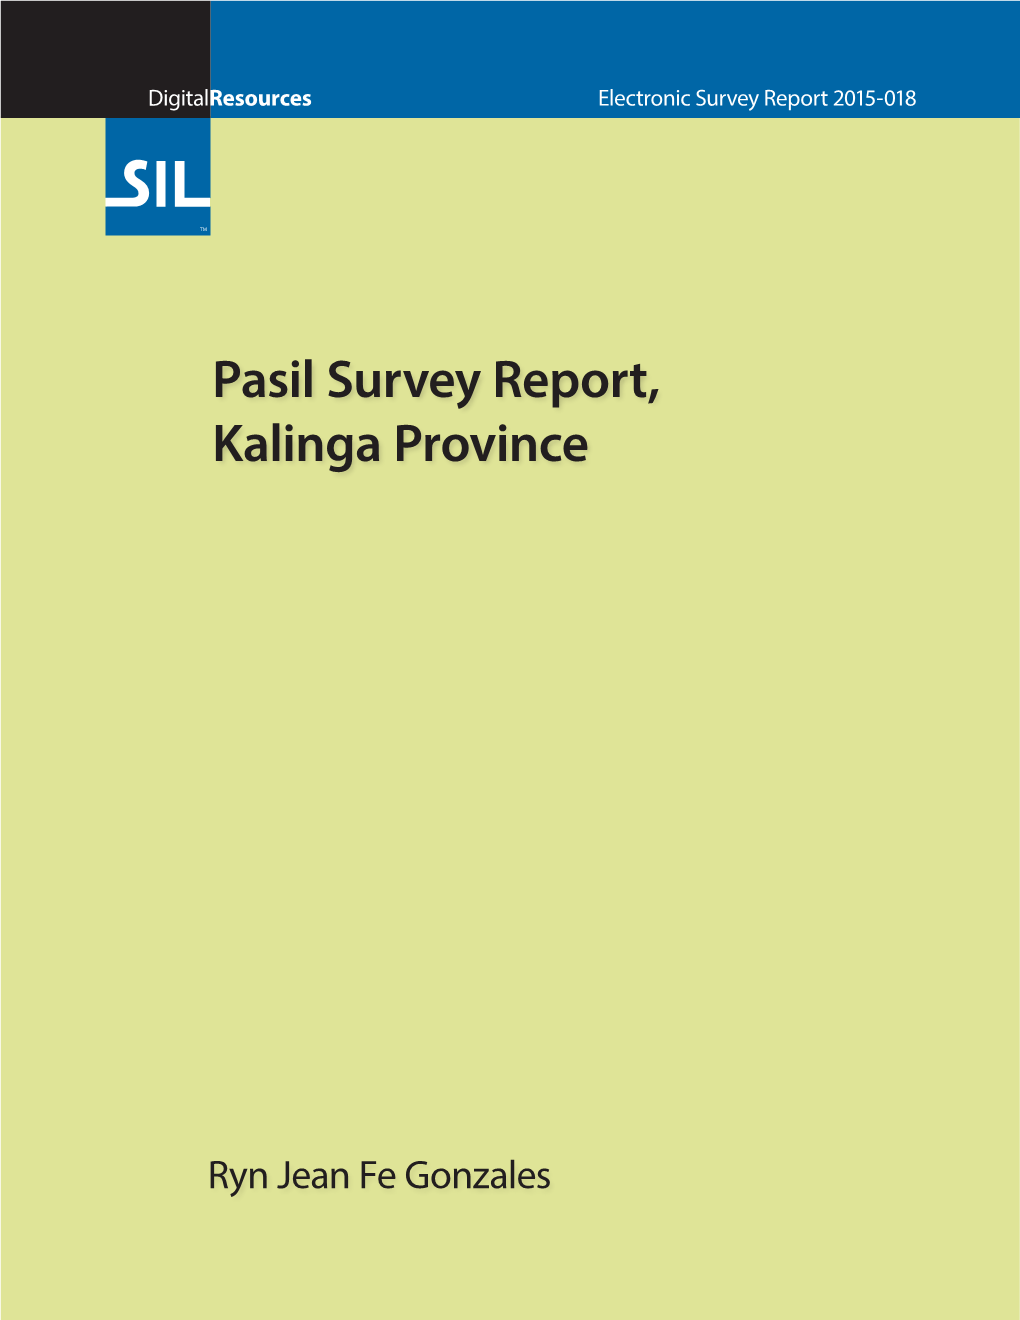 Pasil Survey Report, Kalinga Province